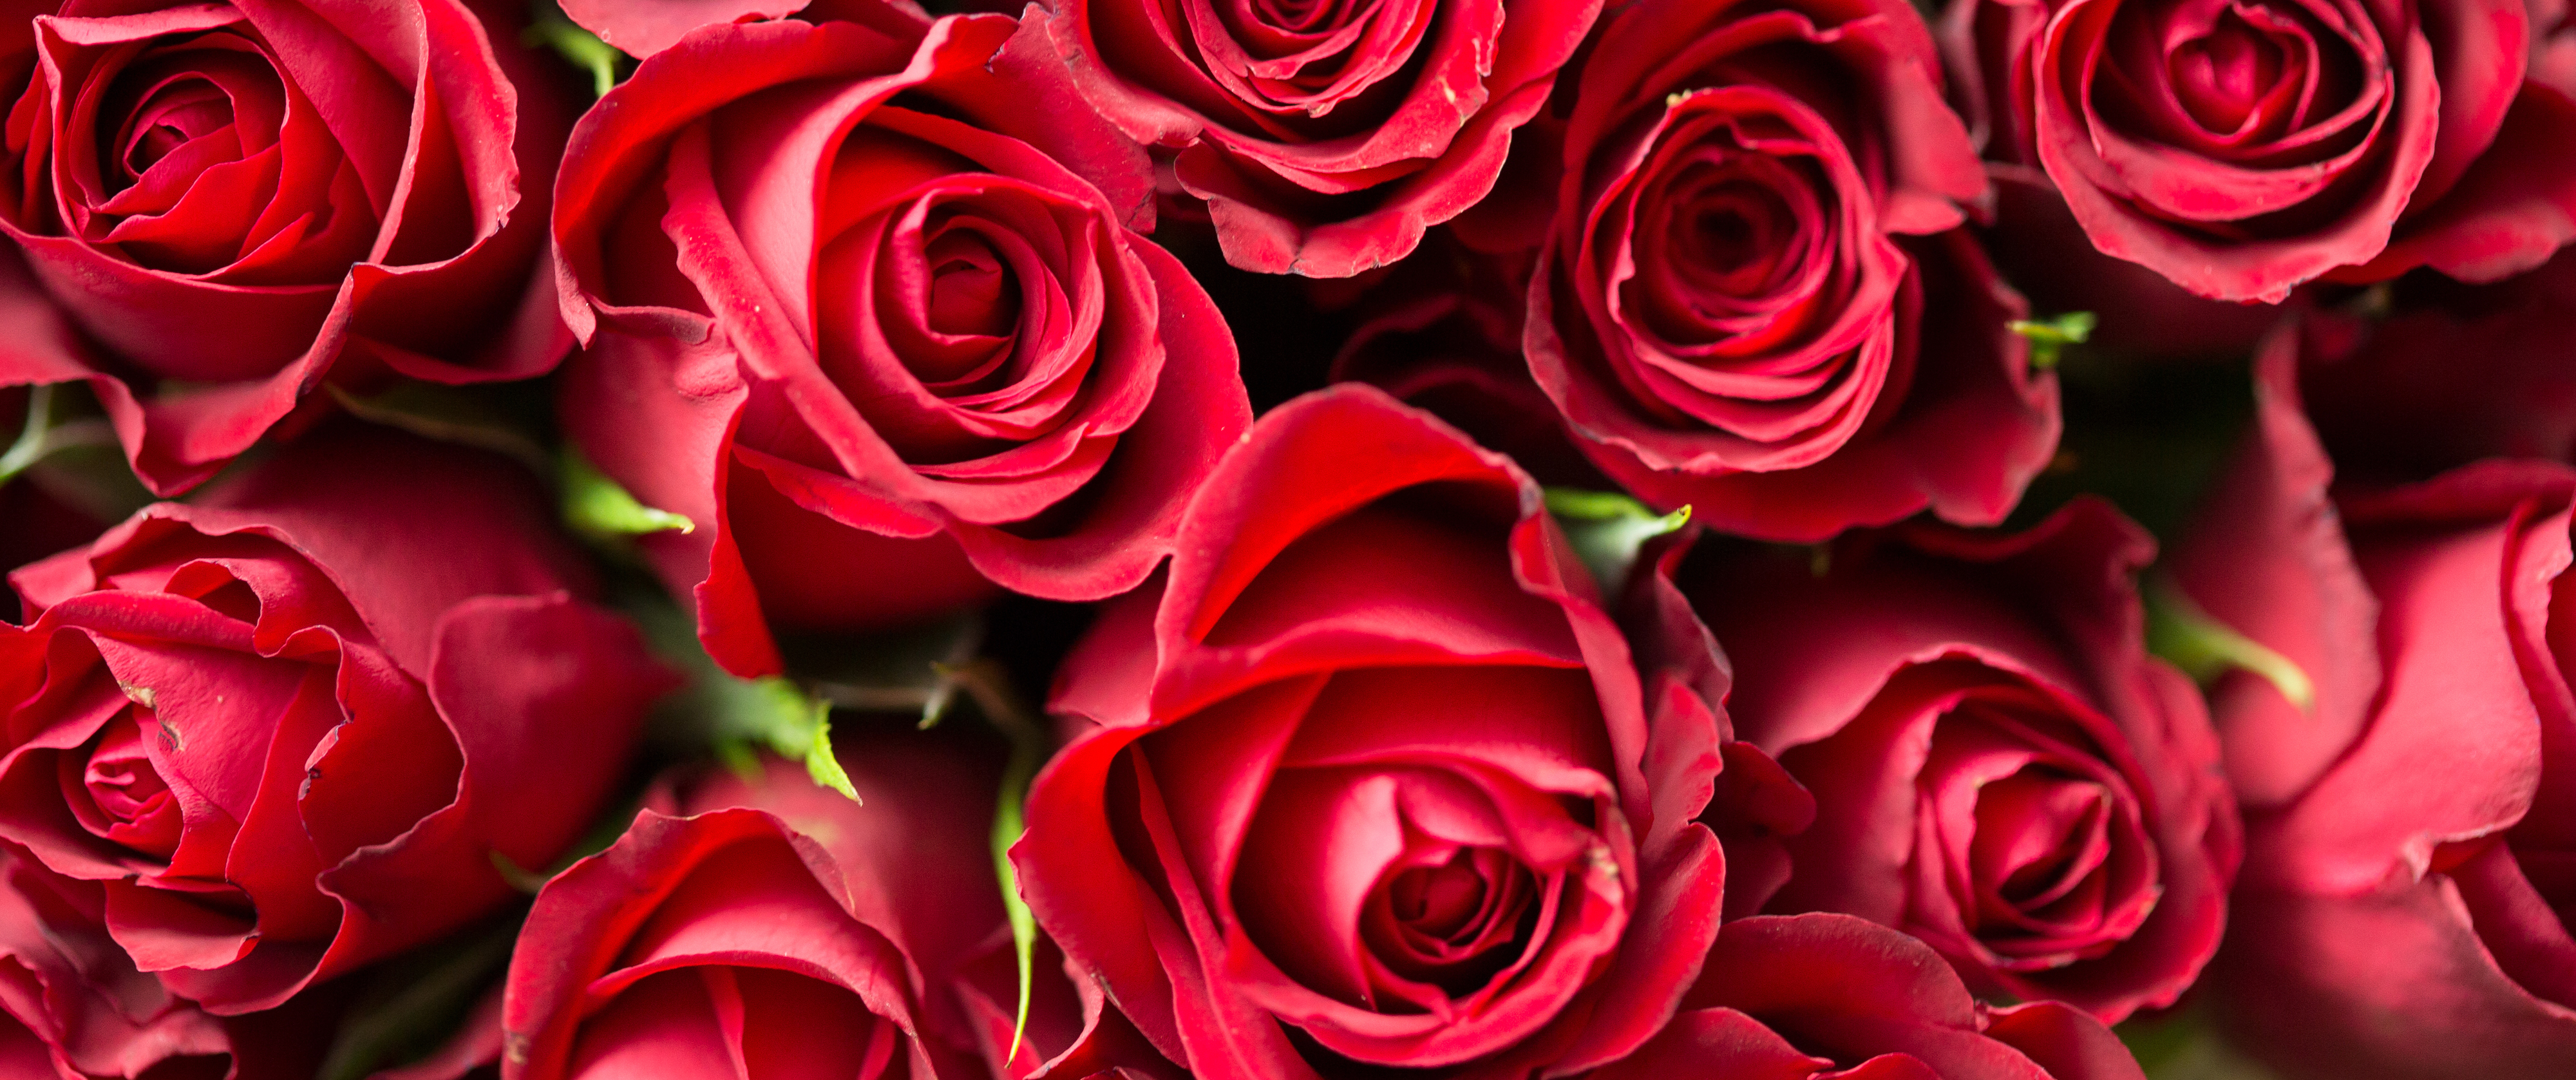 MissPonka Мои любимые зветы - розы! / My favorite flowers are roses! image: 1